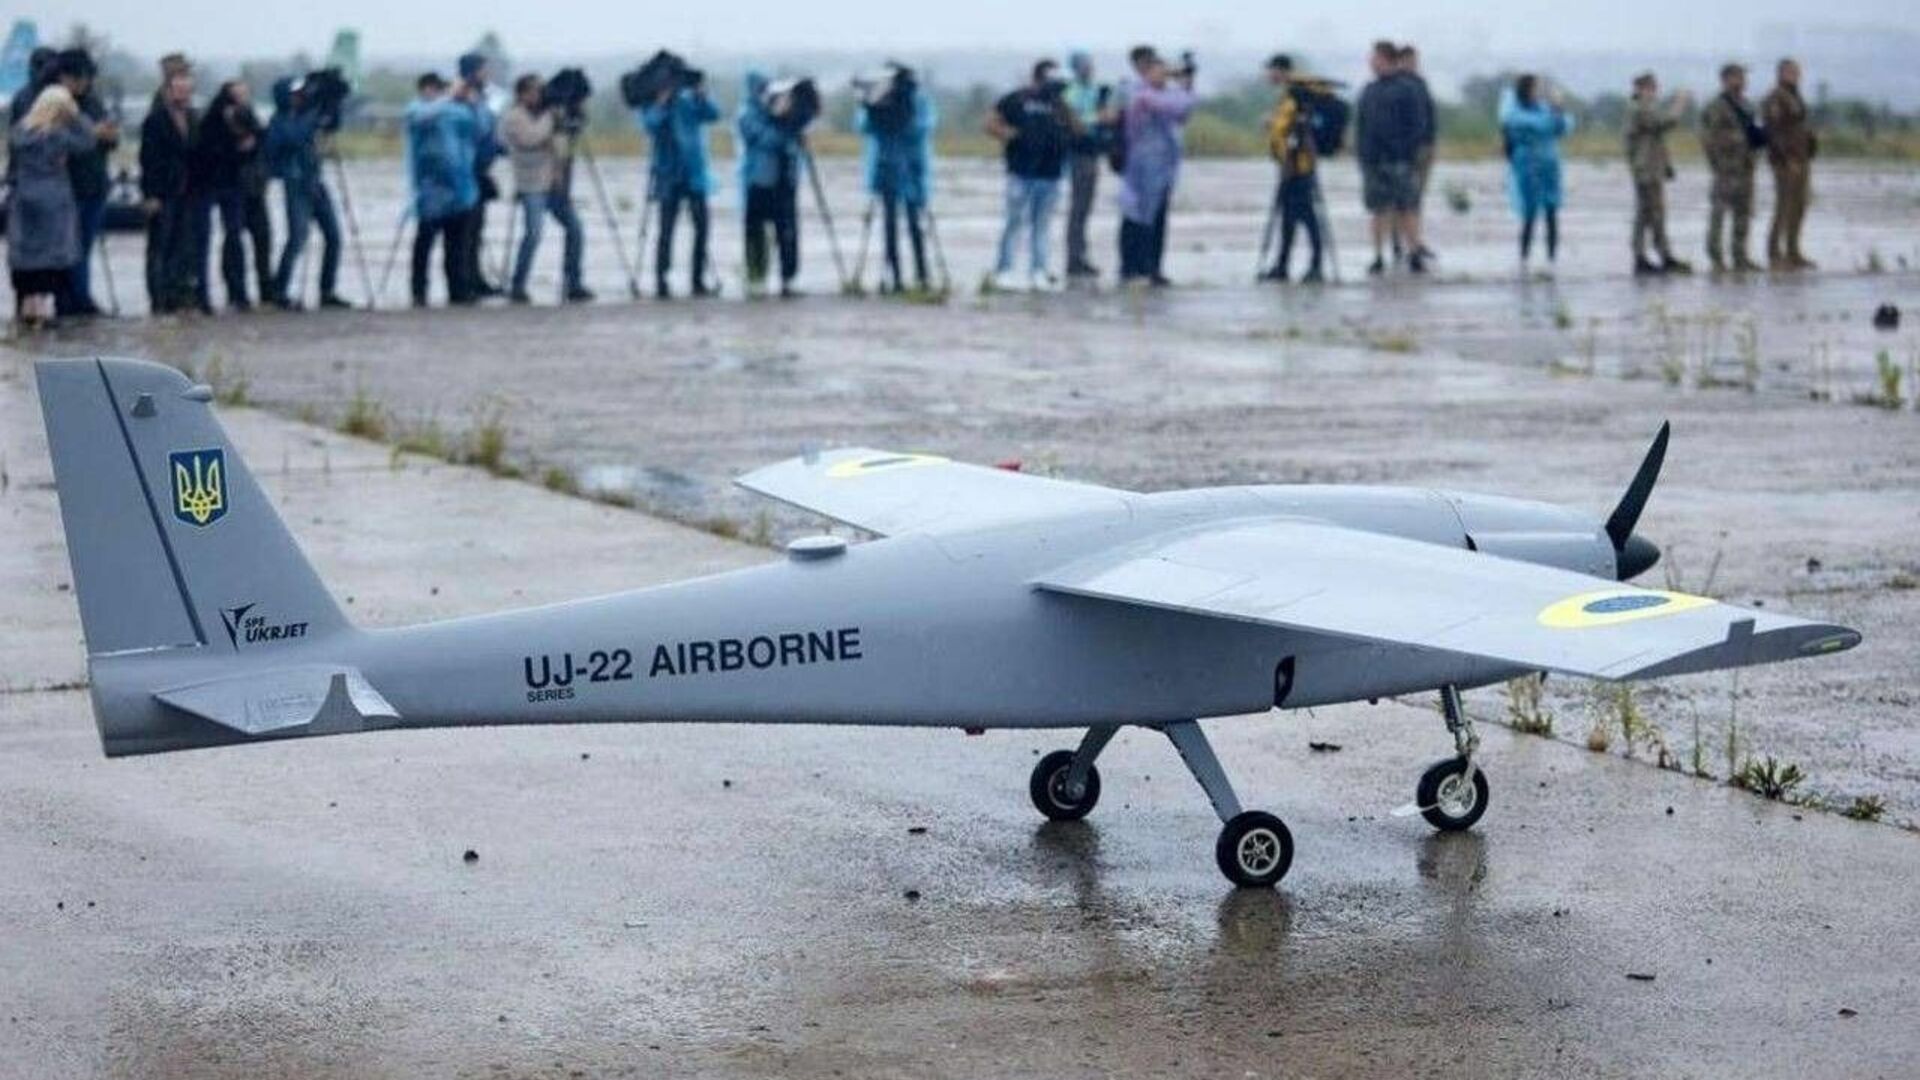 Ukrainian drones